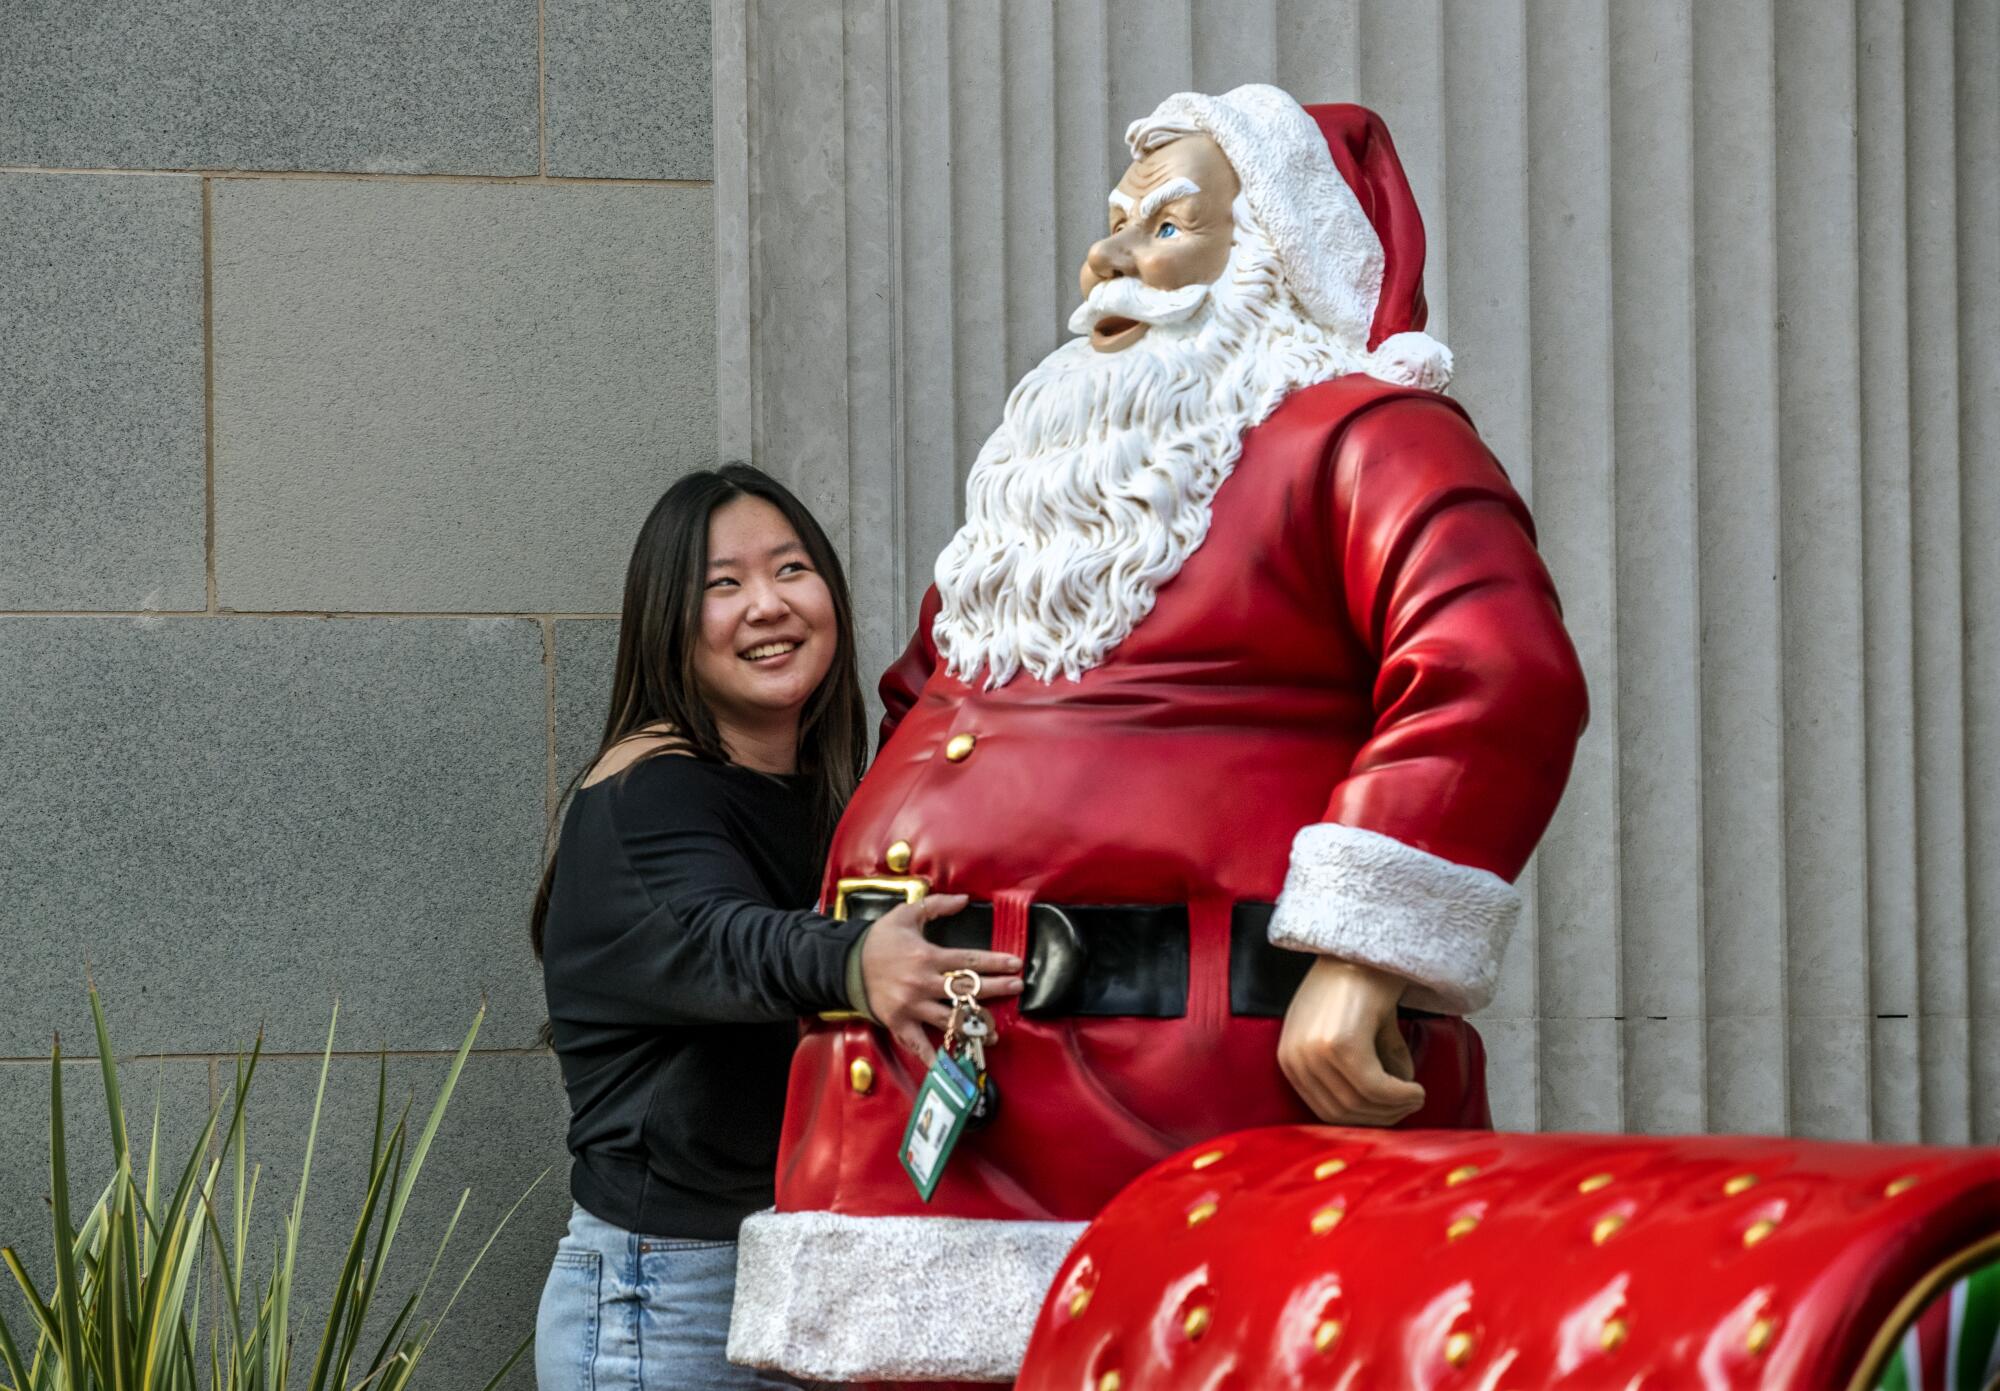 BEVERLY HILLS, CA-DECEMBER 16, 2022: Taylor Baik, 19, of Pasadena, hugs a Santa Claus statue